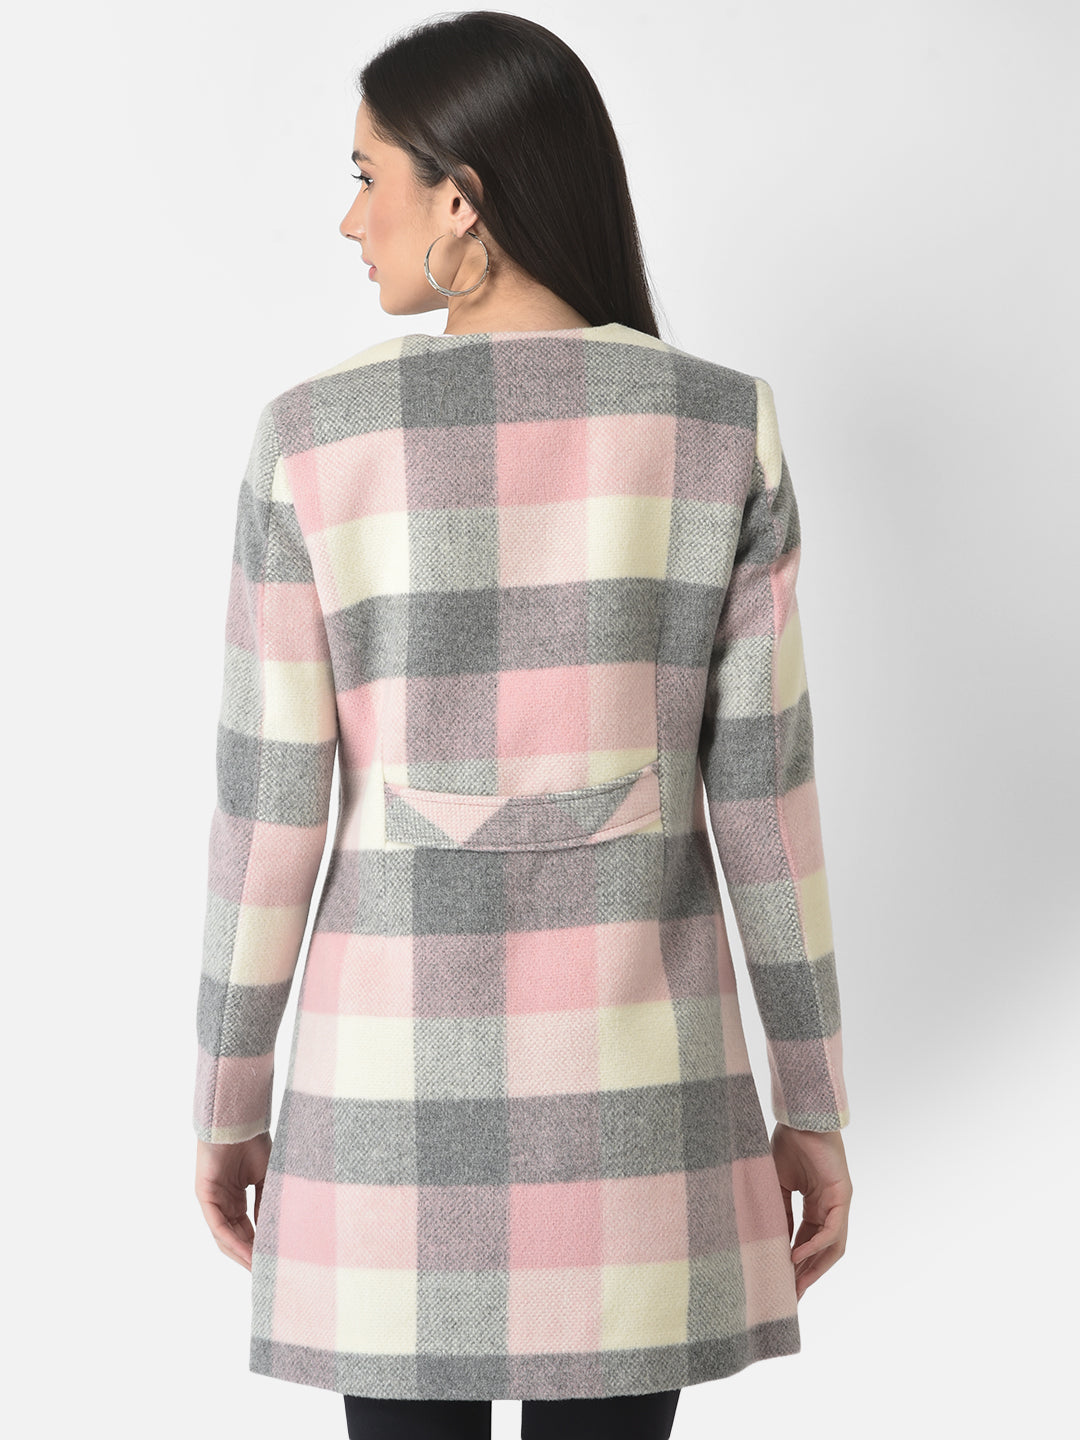  Multi-Coloured Checkered Over Coat